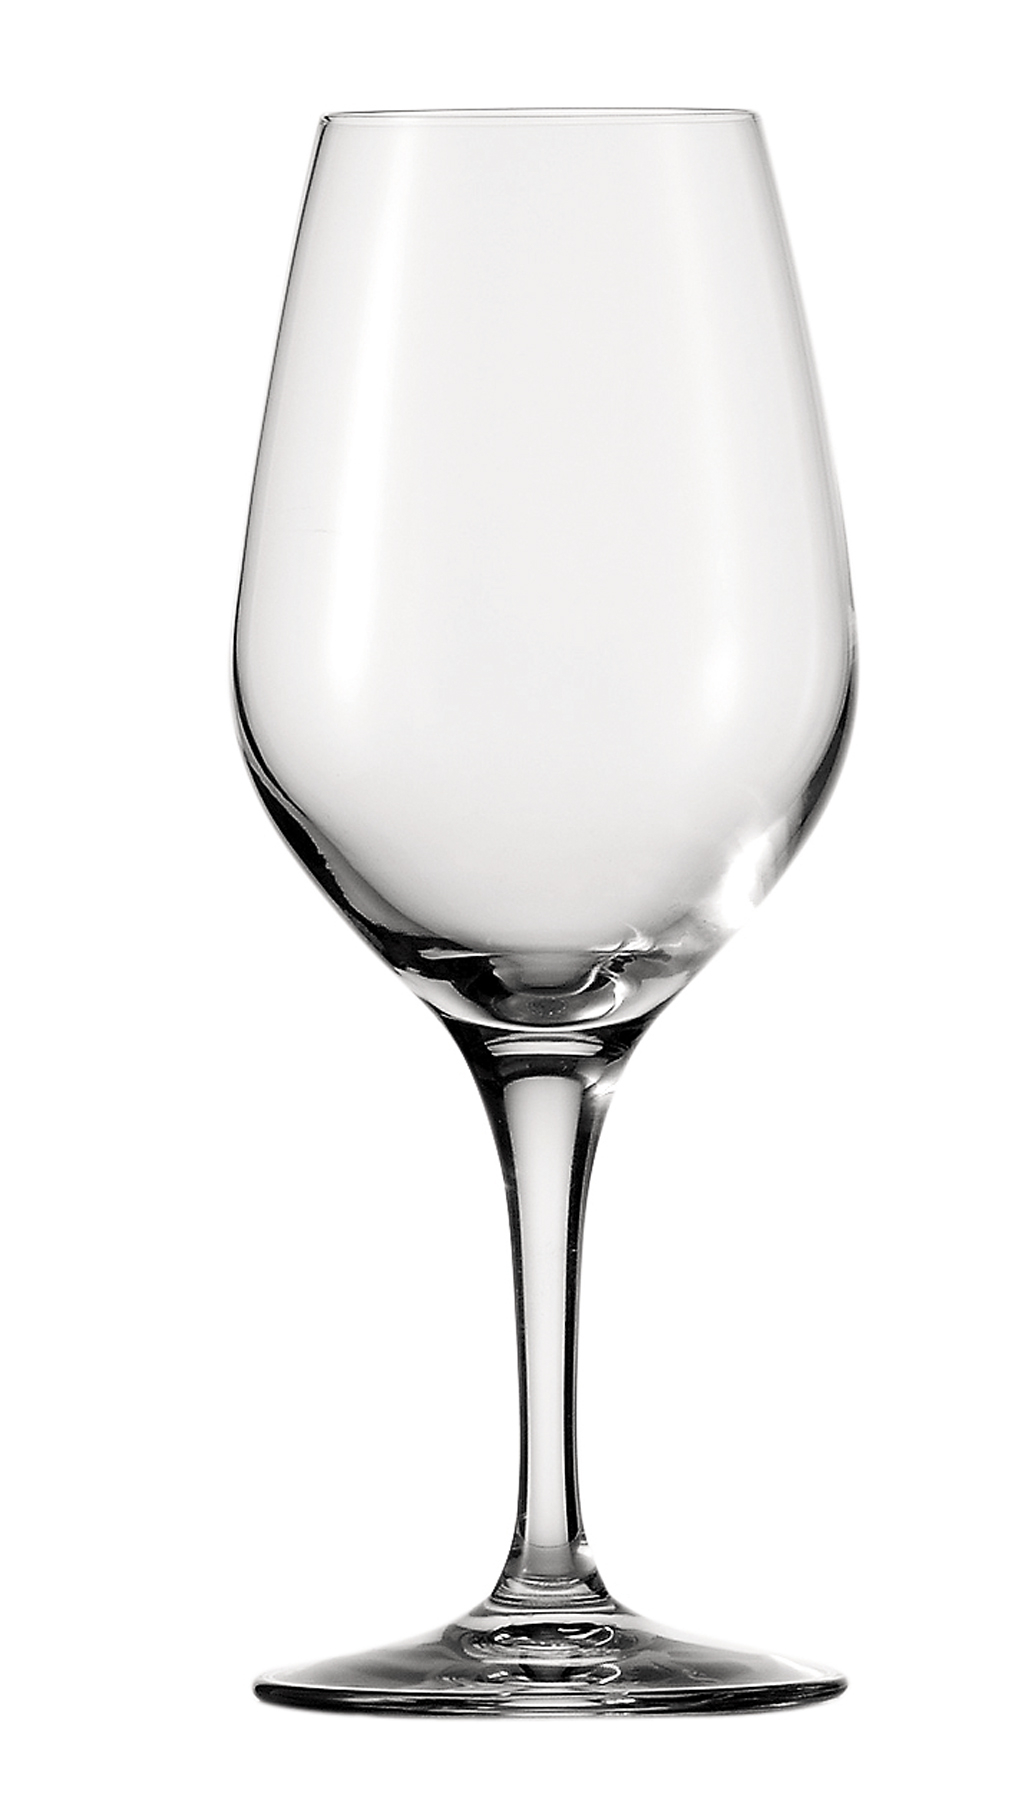 Professional tasting glass, Special Glasses, Spiegelau - 260ml (1 pc.)